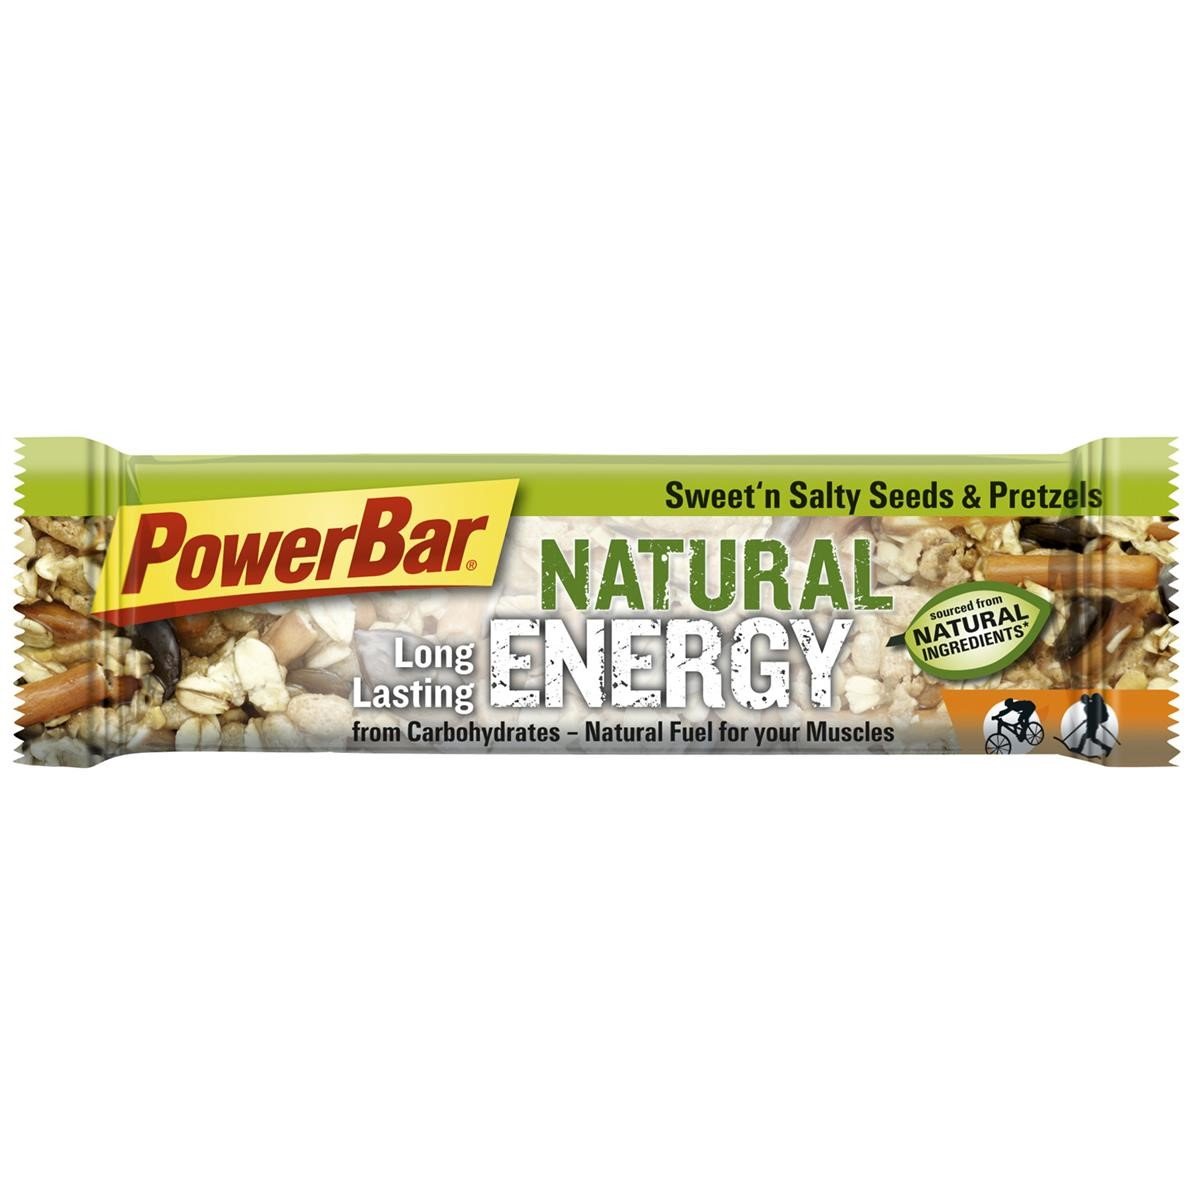 Lebensmittel/Fanartikel/Medien-Essen & Getränke - PowerBar Natural Energy Riegel Sweet n Salty Seeds & Pretzels, 40g